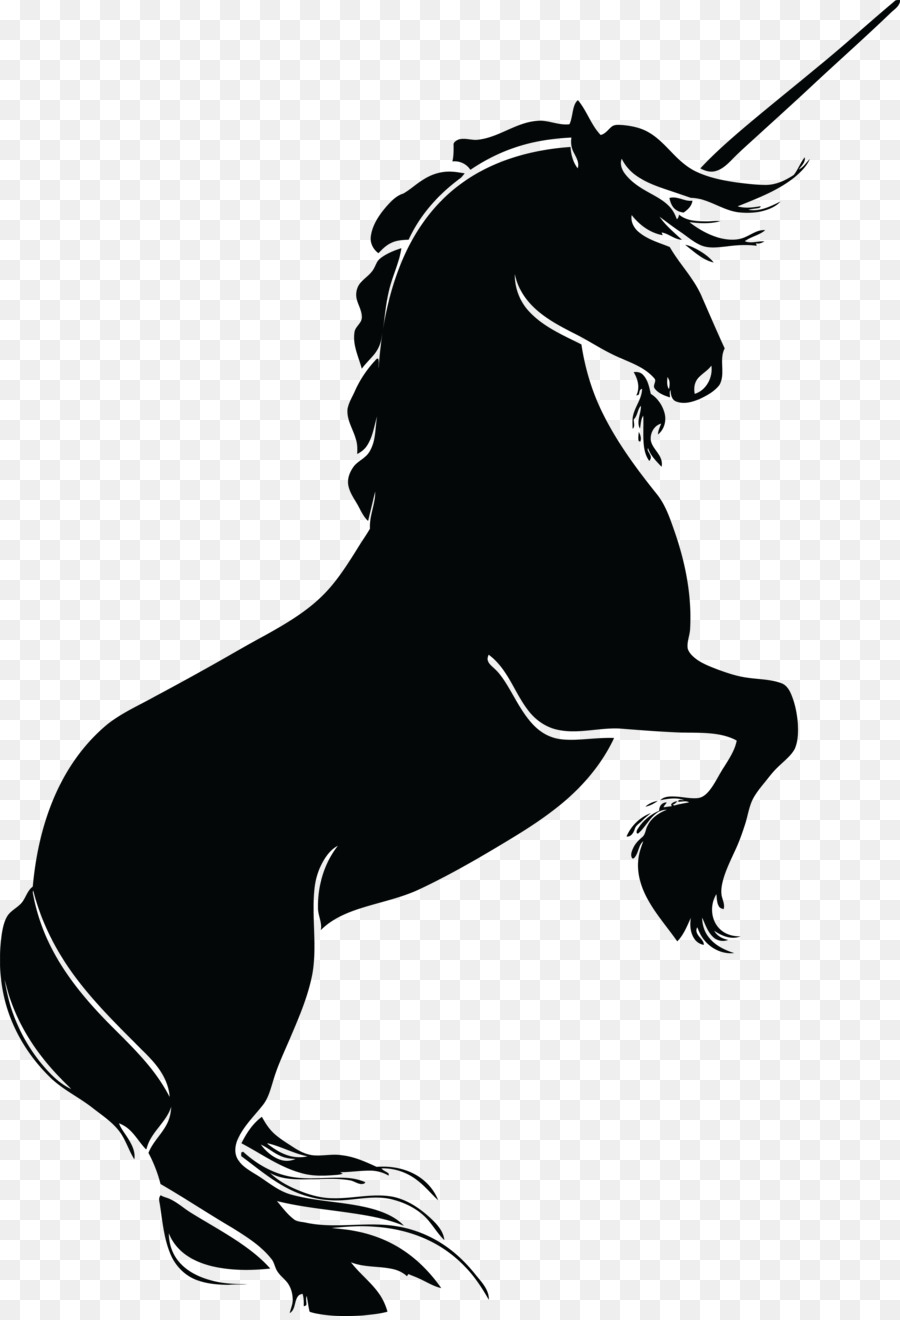 Horse Unicorn Silhouette Clip art - unicorn head png download - 4000*5848 - Free Transparent Horse png Download.